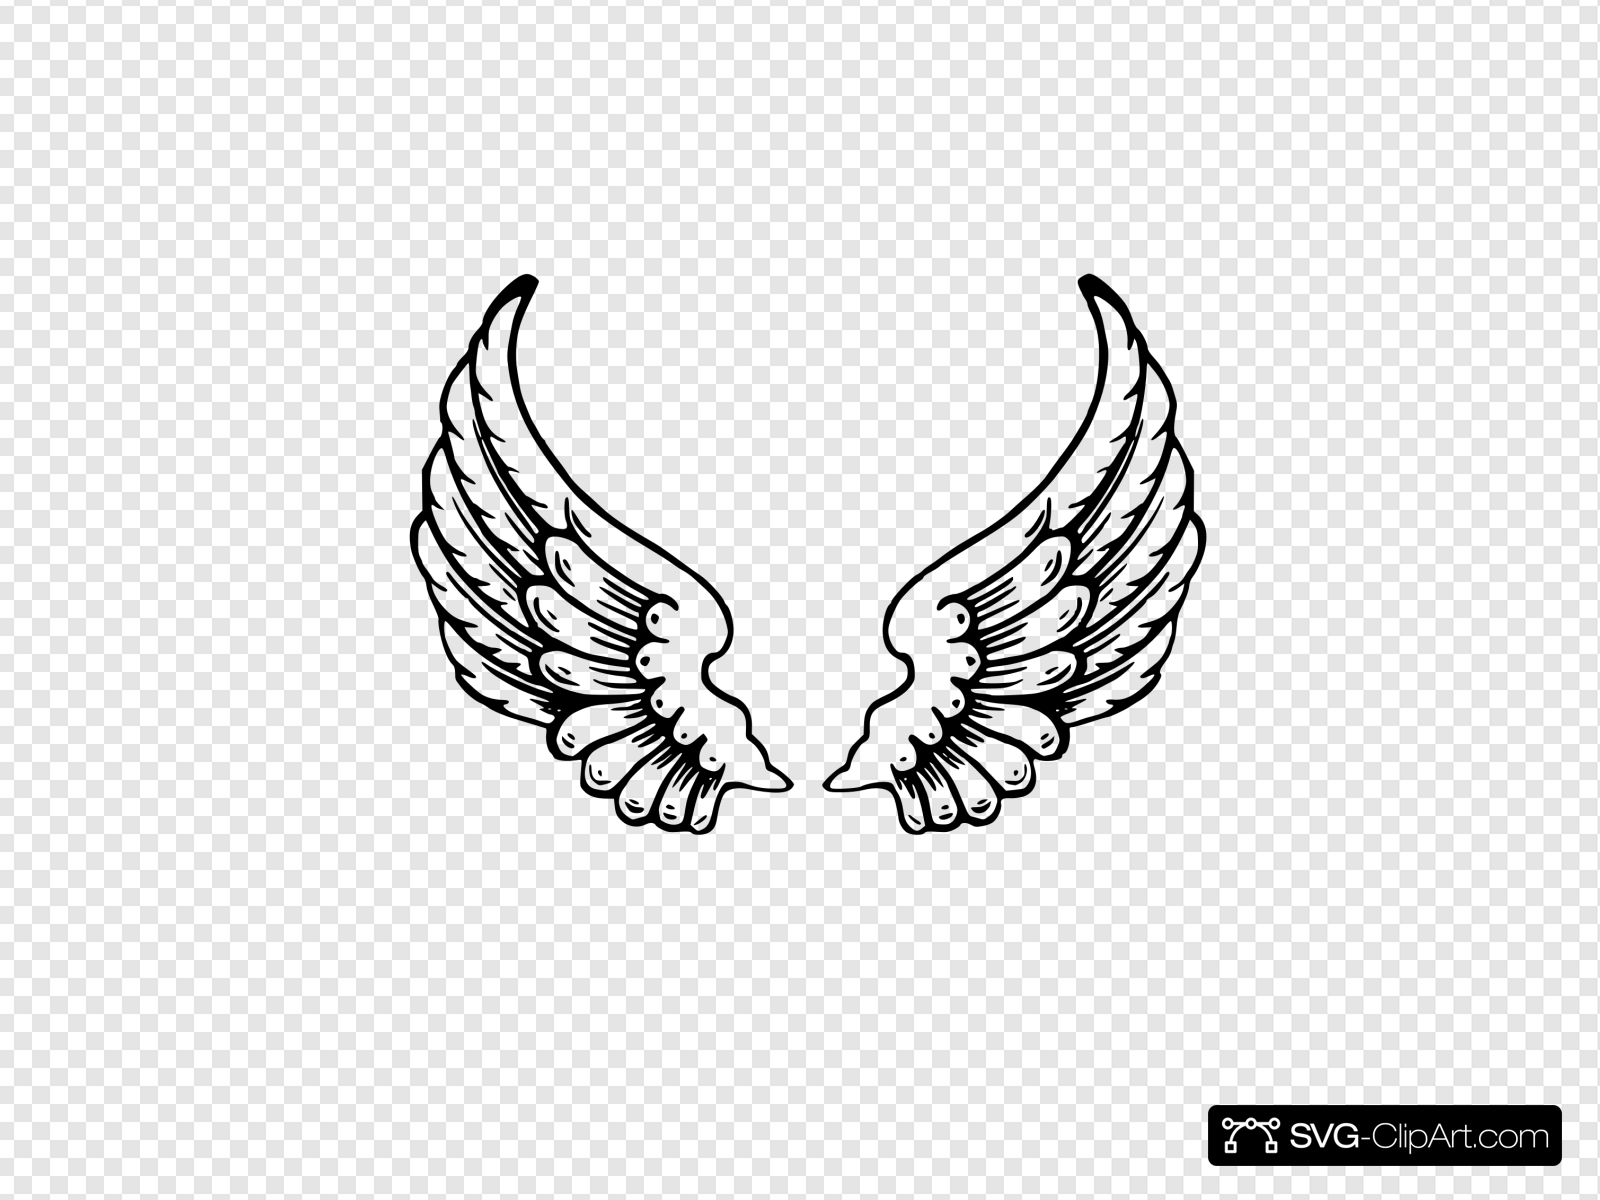 Angel wings clip.